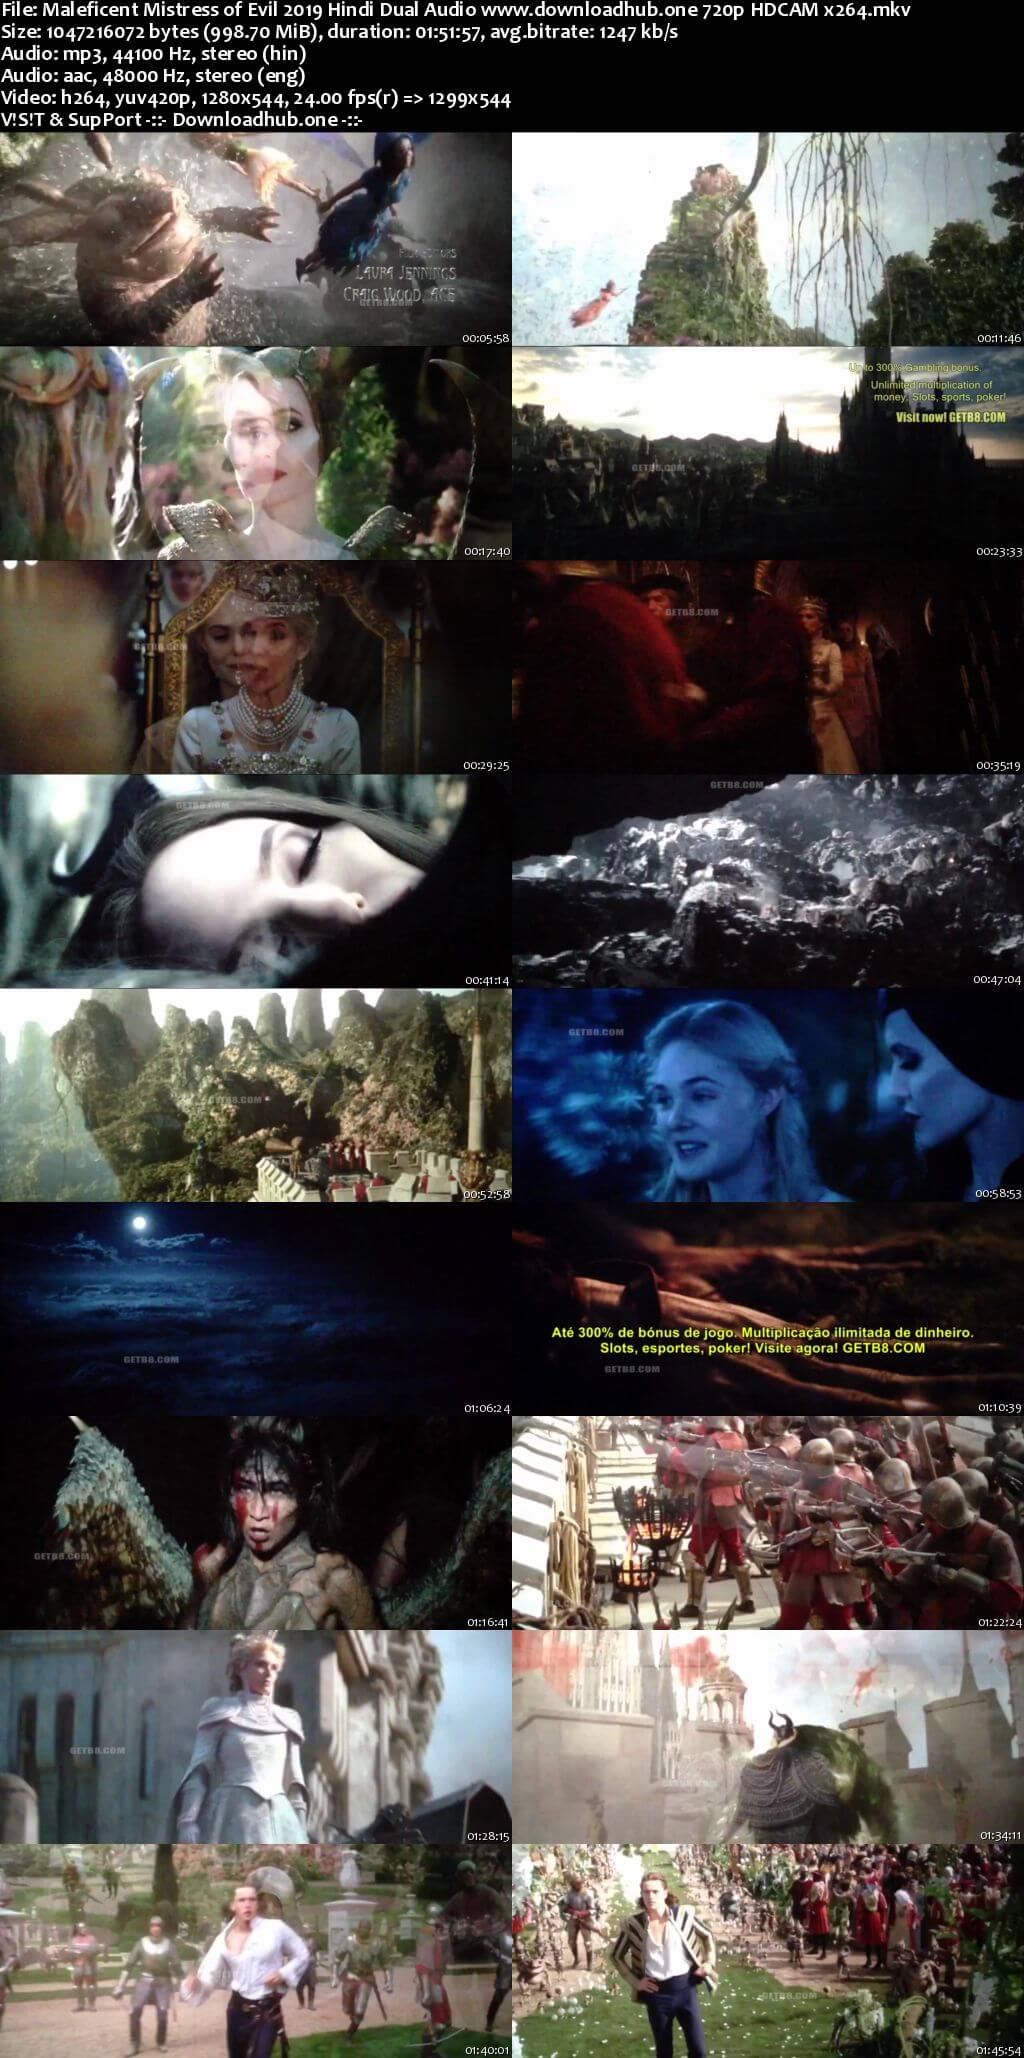 Maleficent Mistress of Evil 2019 Hindi Dual Audio 720p HDCAM x264